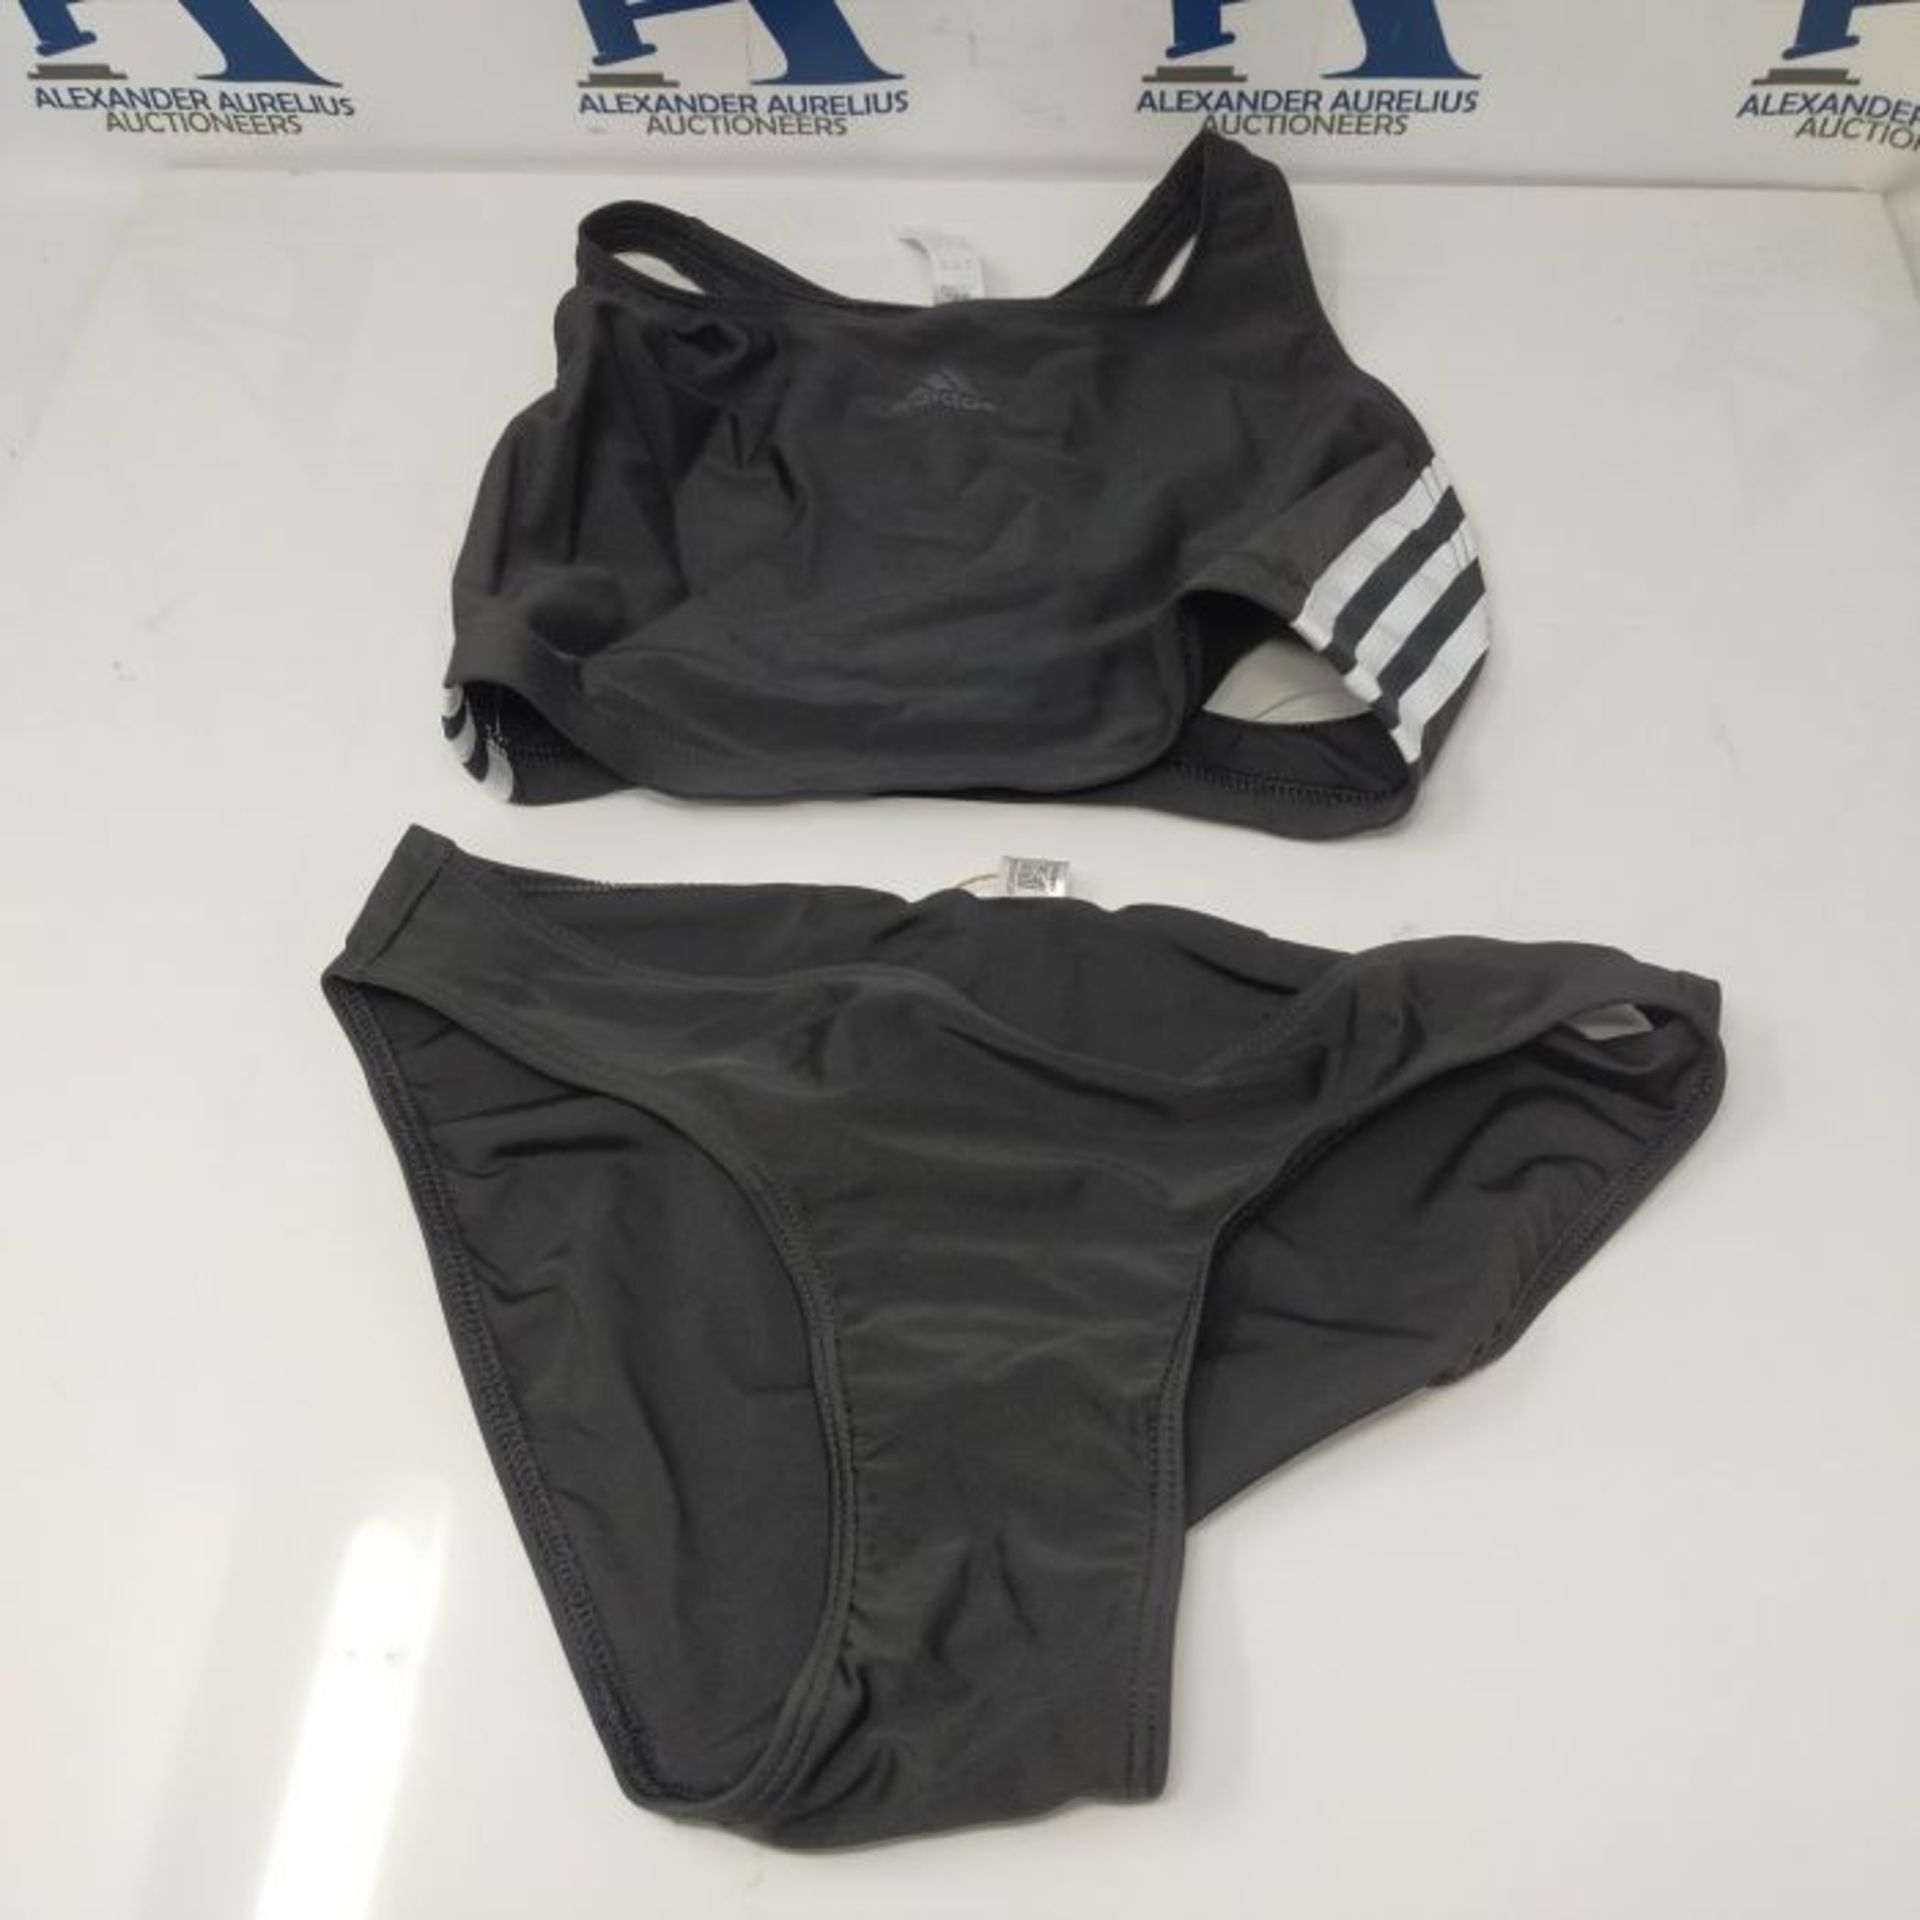 Adidas Women's Fit 2pc 3s Swimsuit, Black, EU 38, UK 34 - Image 2 of 2